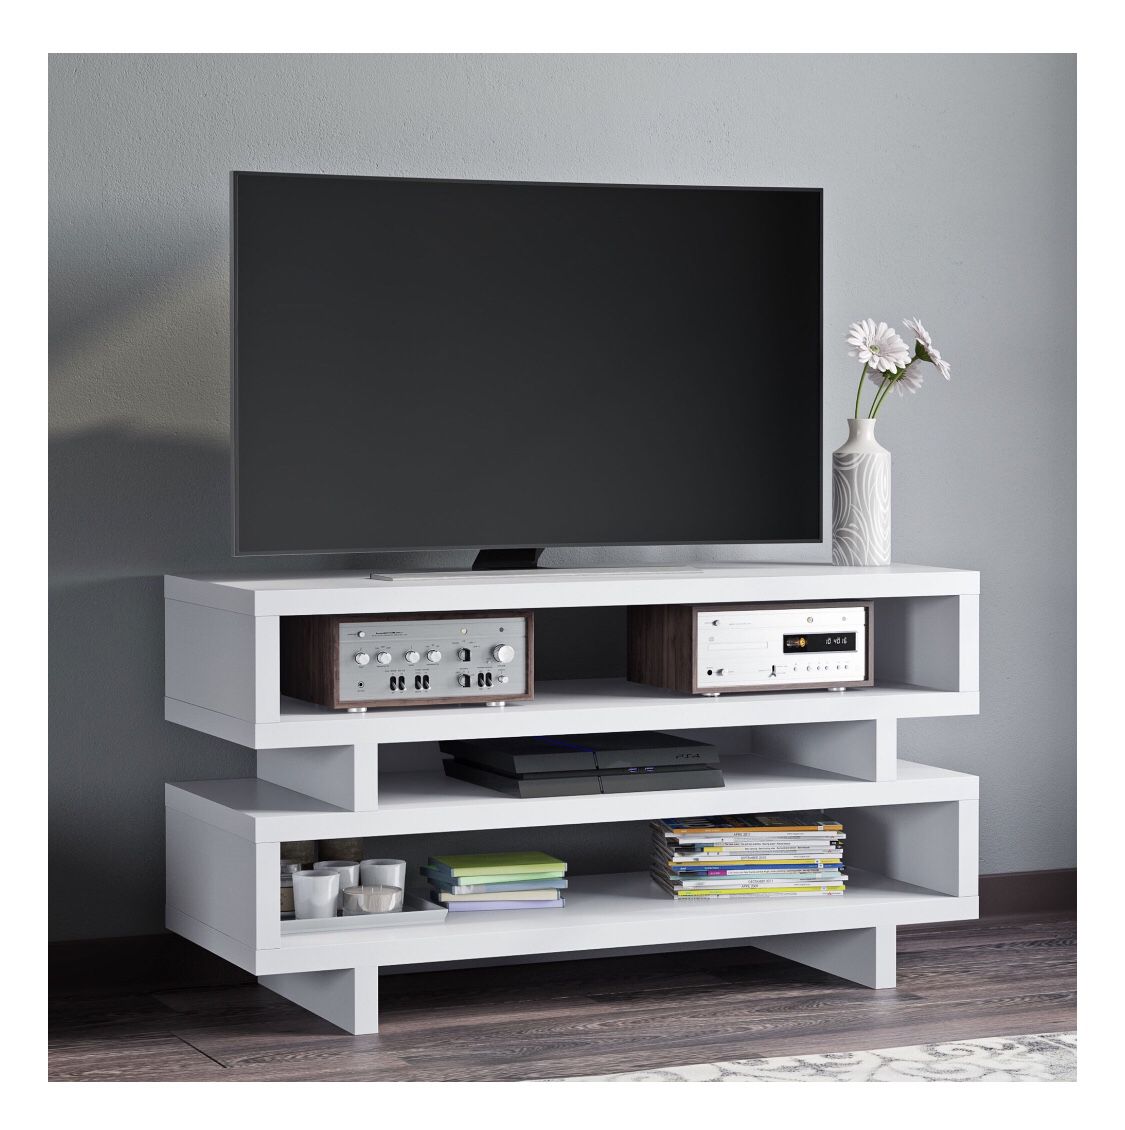 White TV Stand Book Shelf Modern Home Decor Living Room Storage Organization Open Design